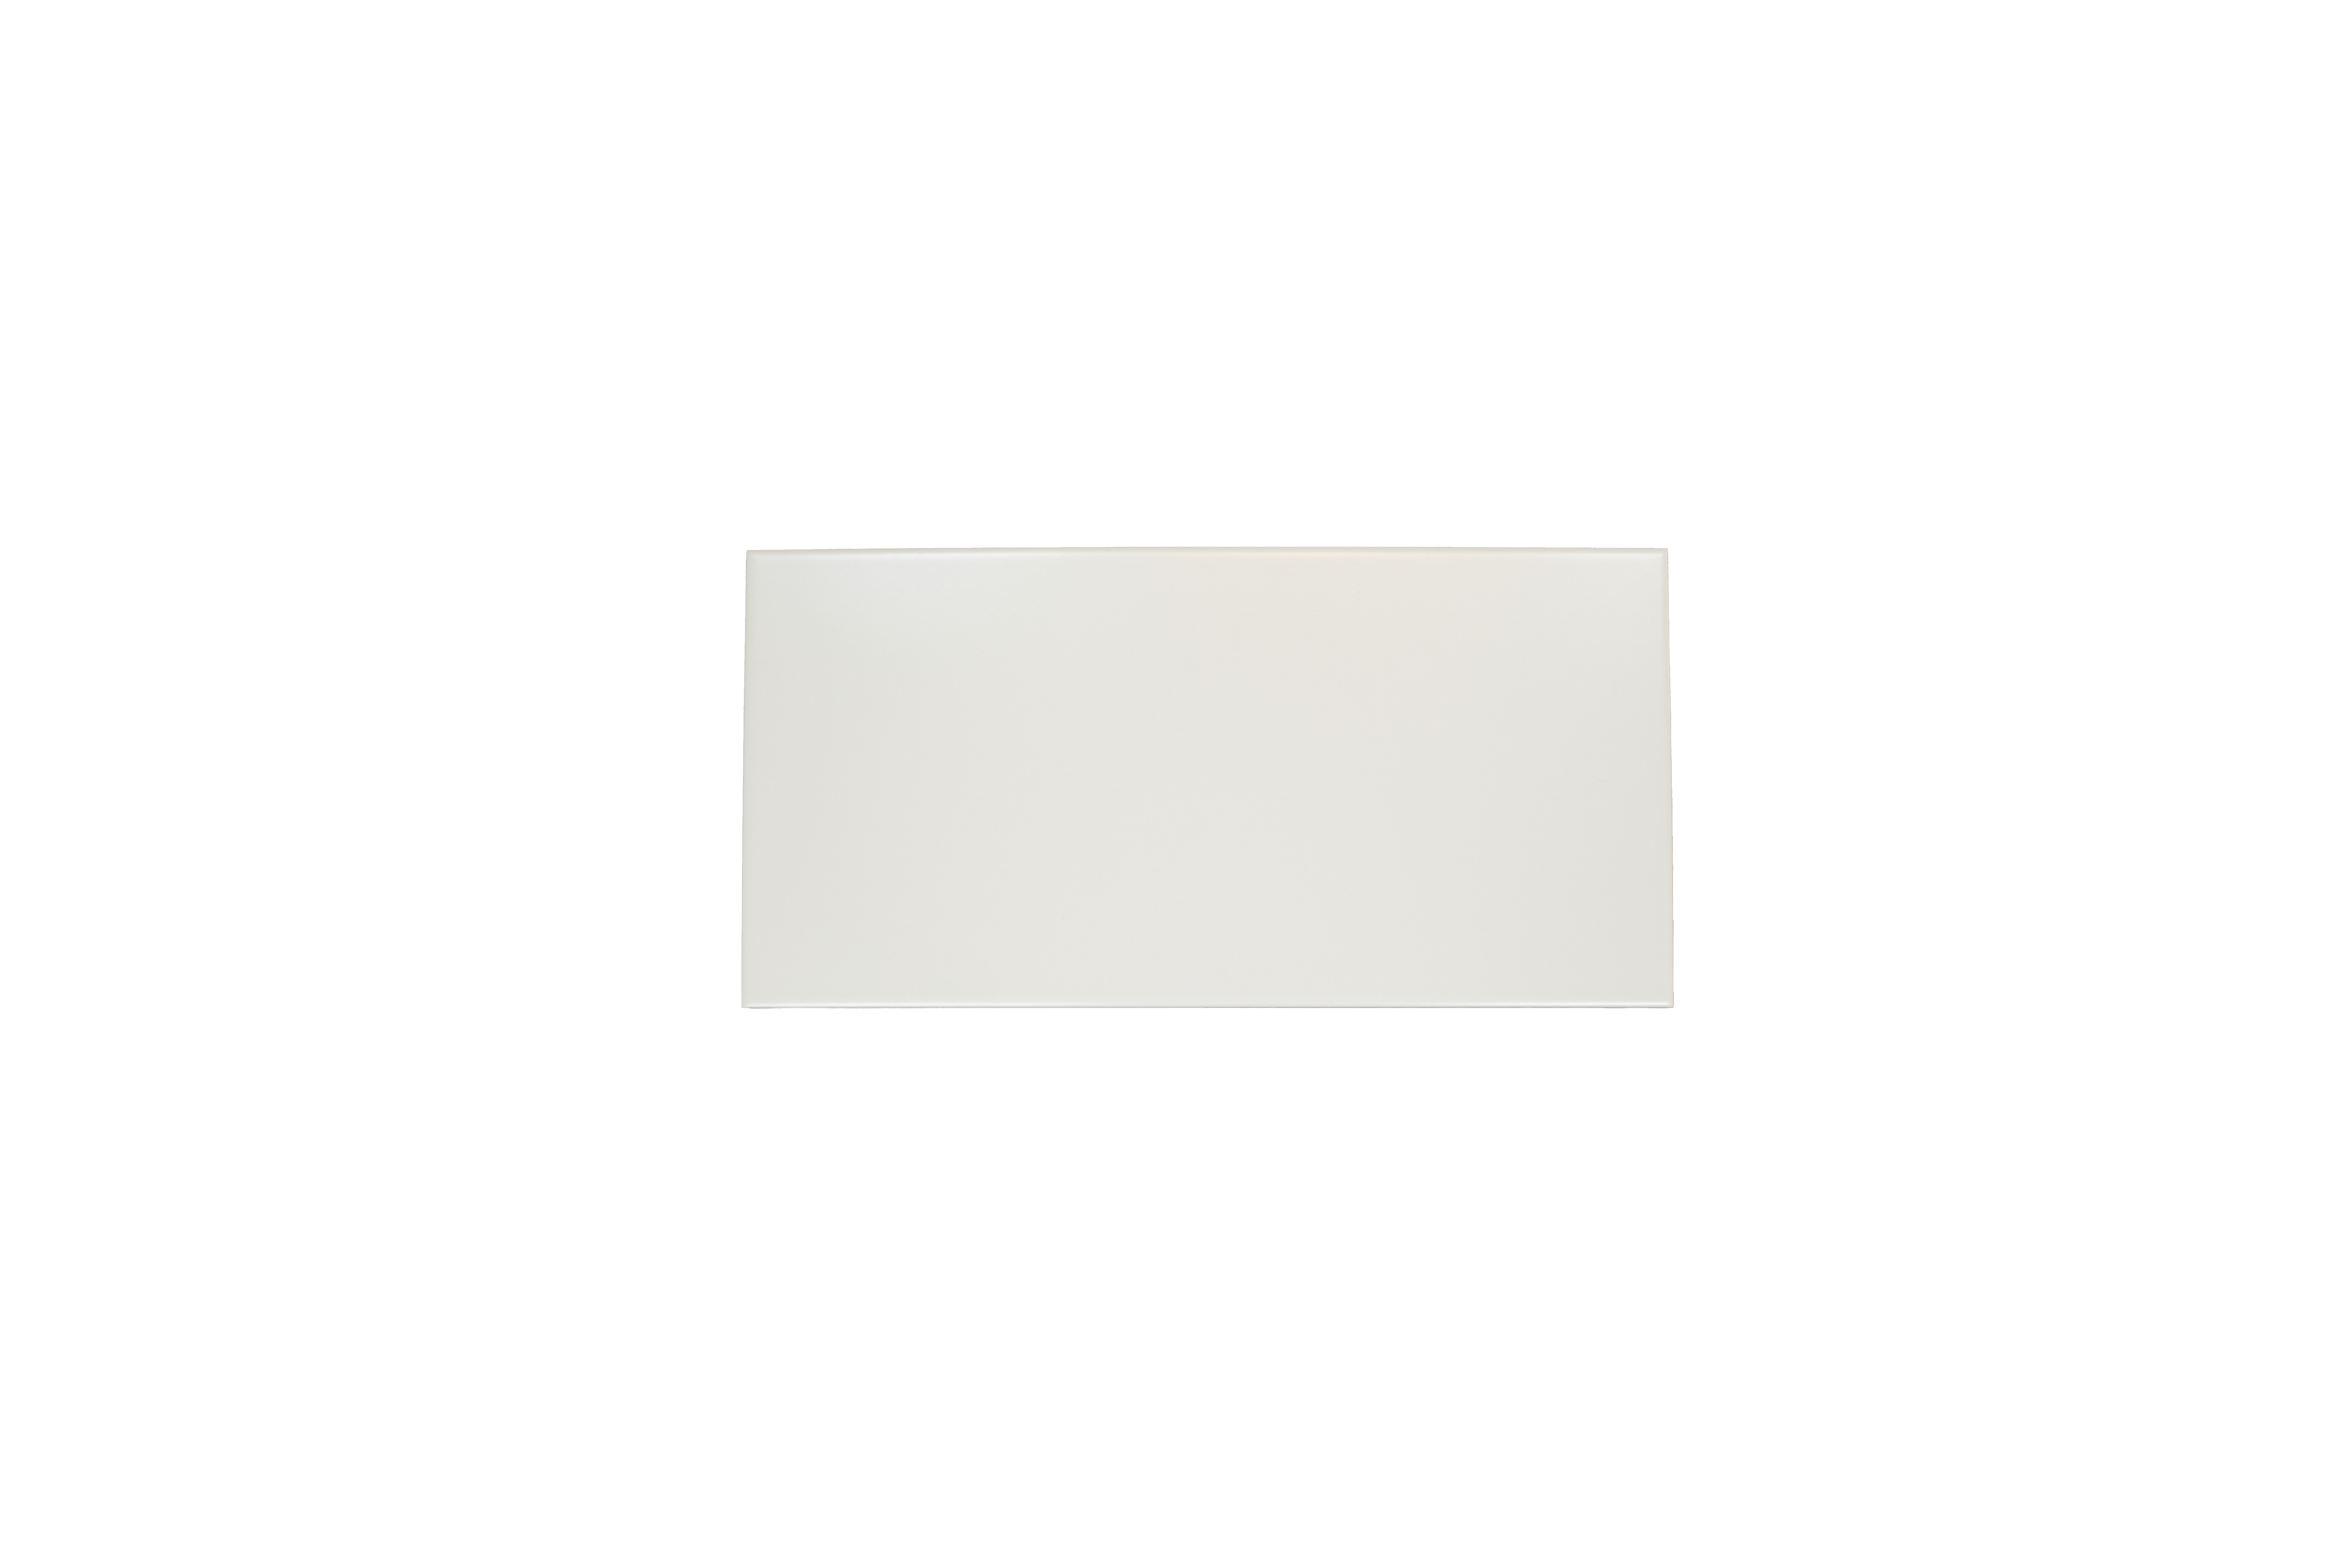 Urbanixx Gres Warschau Wandfliese uni Weiß matt 19,8x39,8 cm  